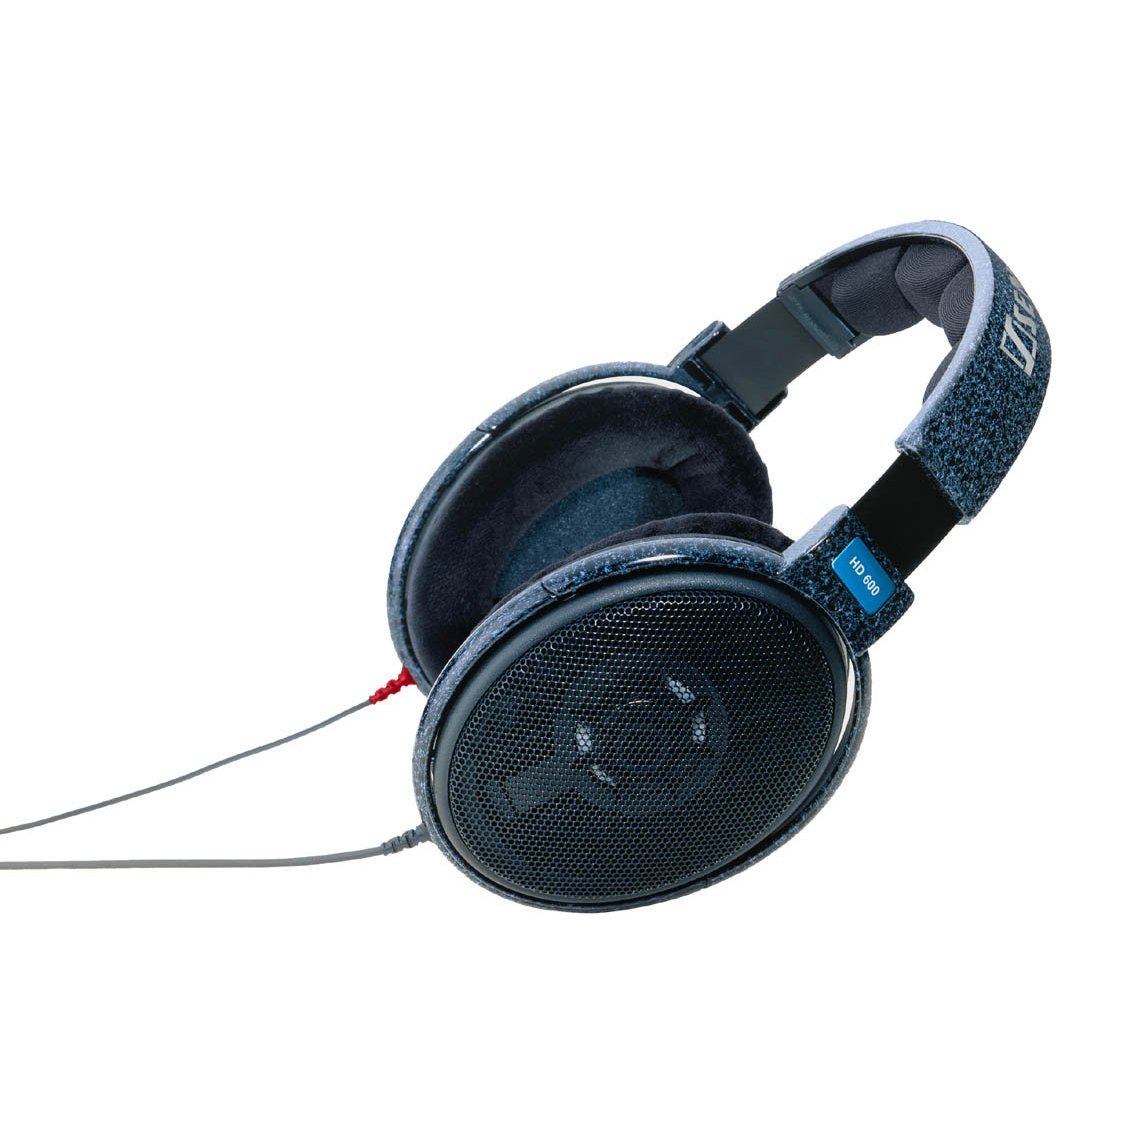 http://thetechjournal.com/wp-content/uploads/images/1109/1316950649-sennheiser-hd-600-open-dynamic-hifi-professional-stereo-headphones-1.jpg